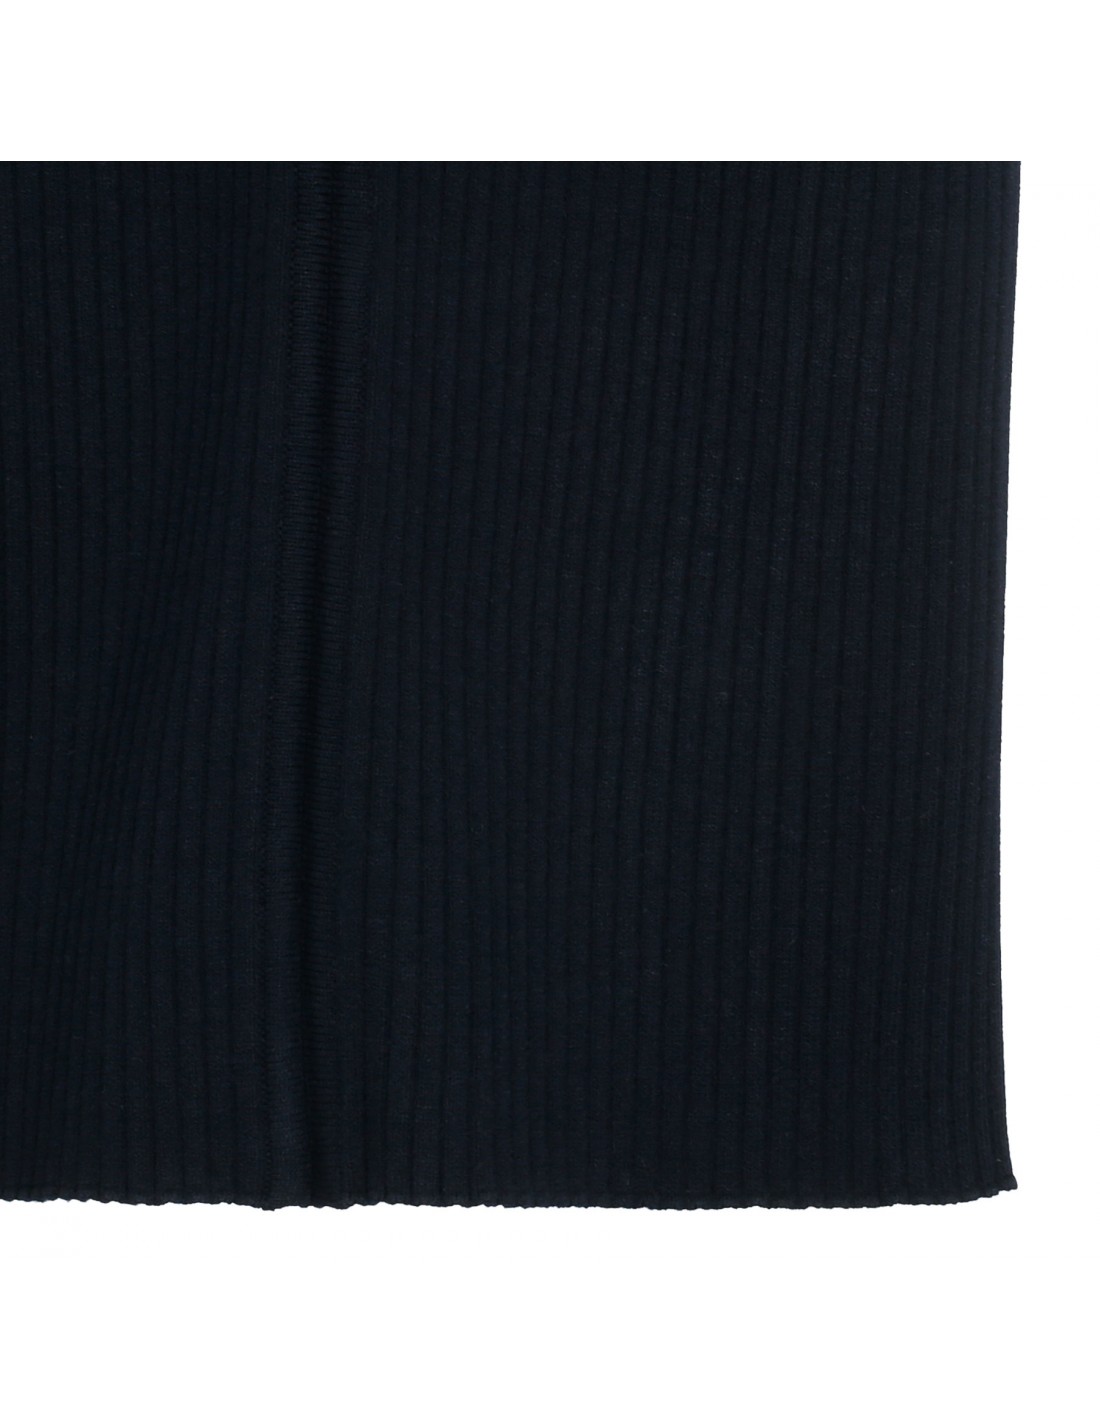 Black ribbed knit dress